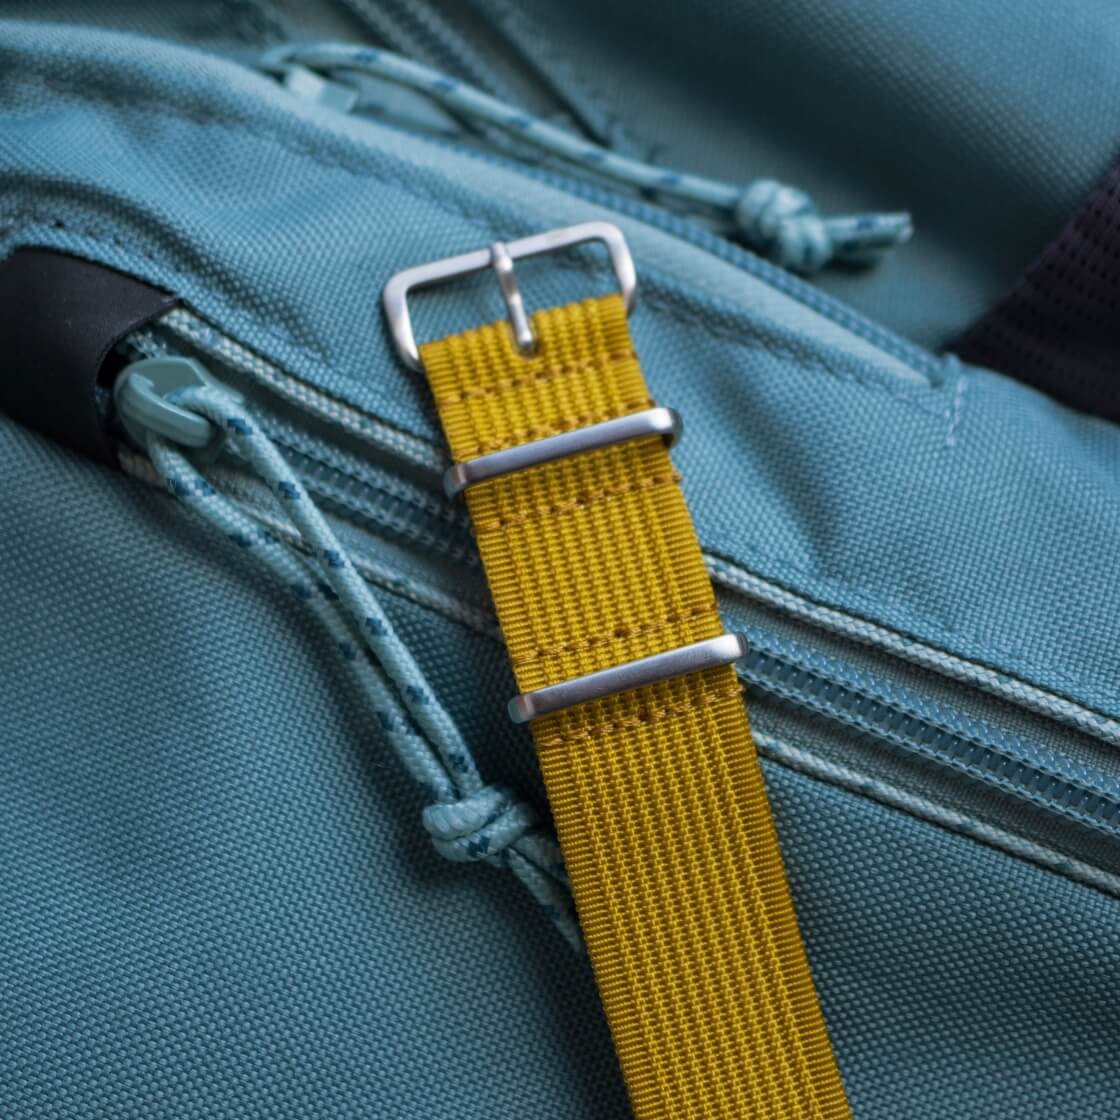 mustard yellow nylon strap